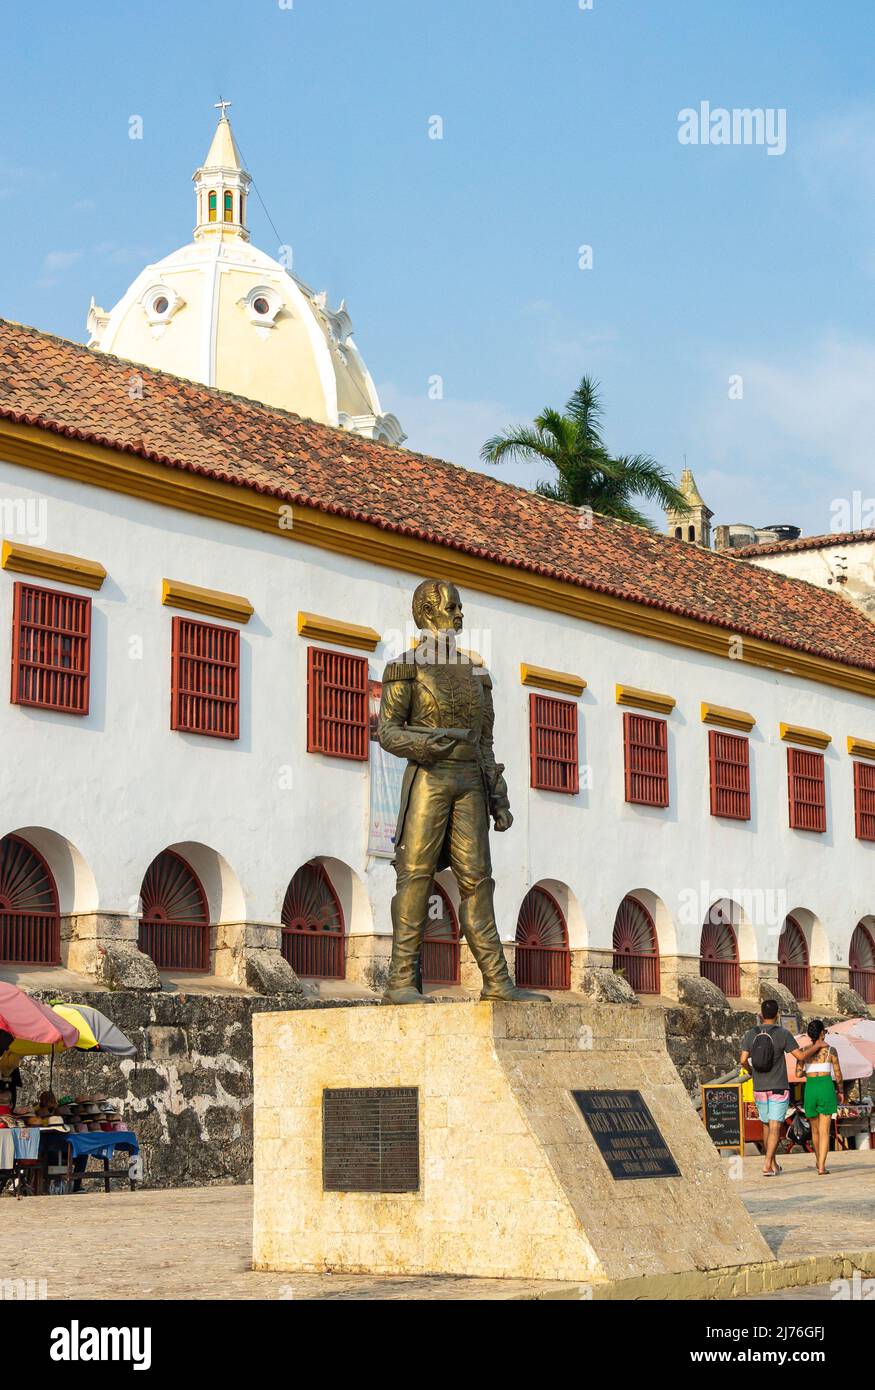 Bancarelle di artigianato e souvenir sul Paseo de Los Heroes Navales, Old Cartagena, Cartagena, Bolivar, Repubblica di Colombia Foto Stock